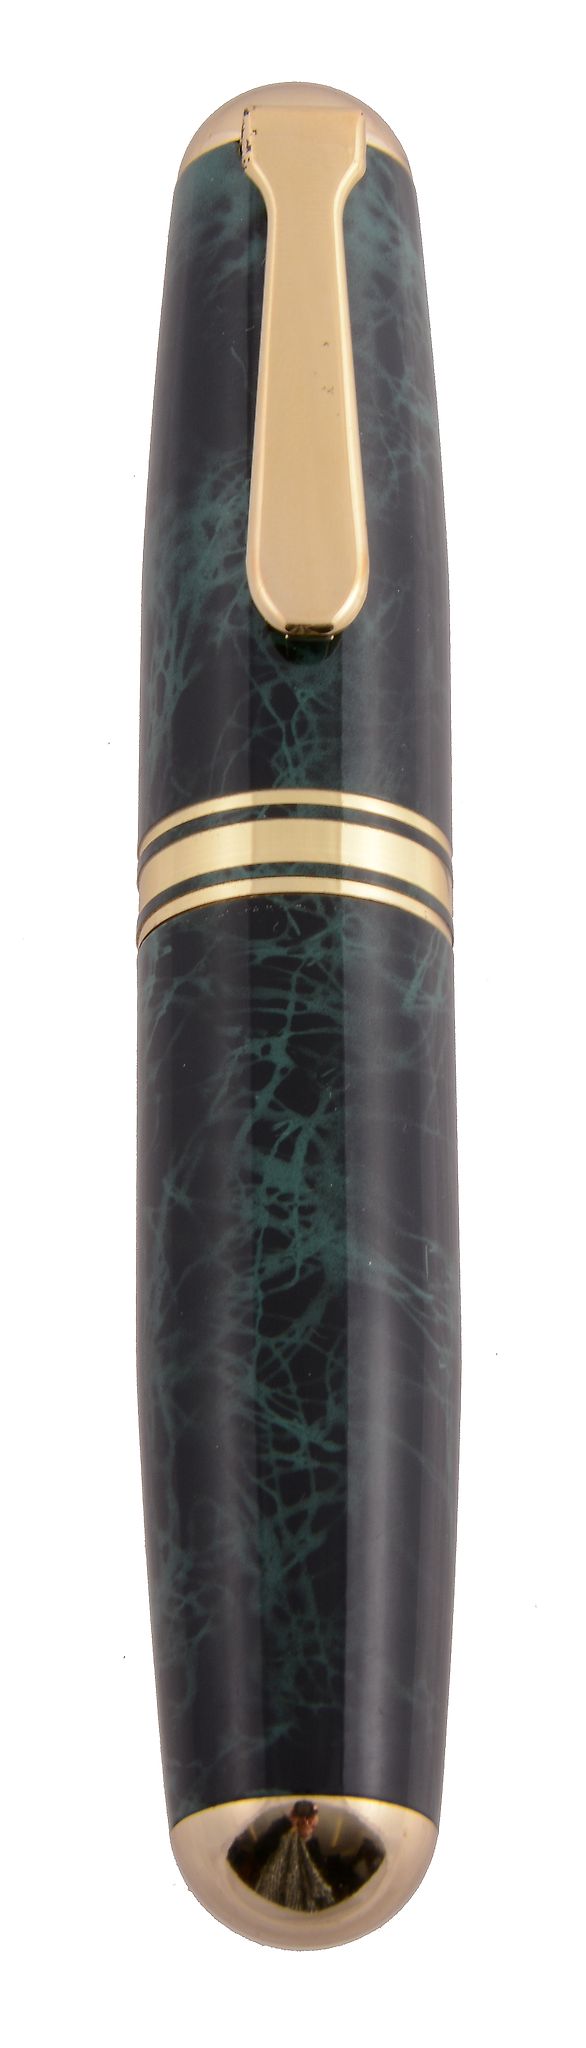 Ferrari Da Varese, a green marbled cigar fountain pen   Ferrari Da Varese, a green marbled cigar